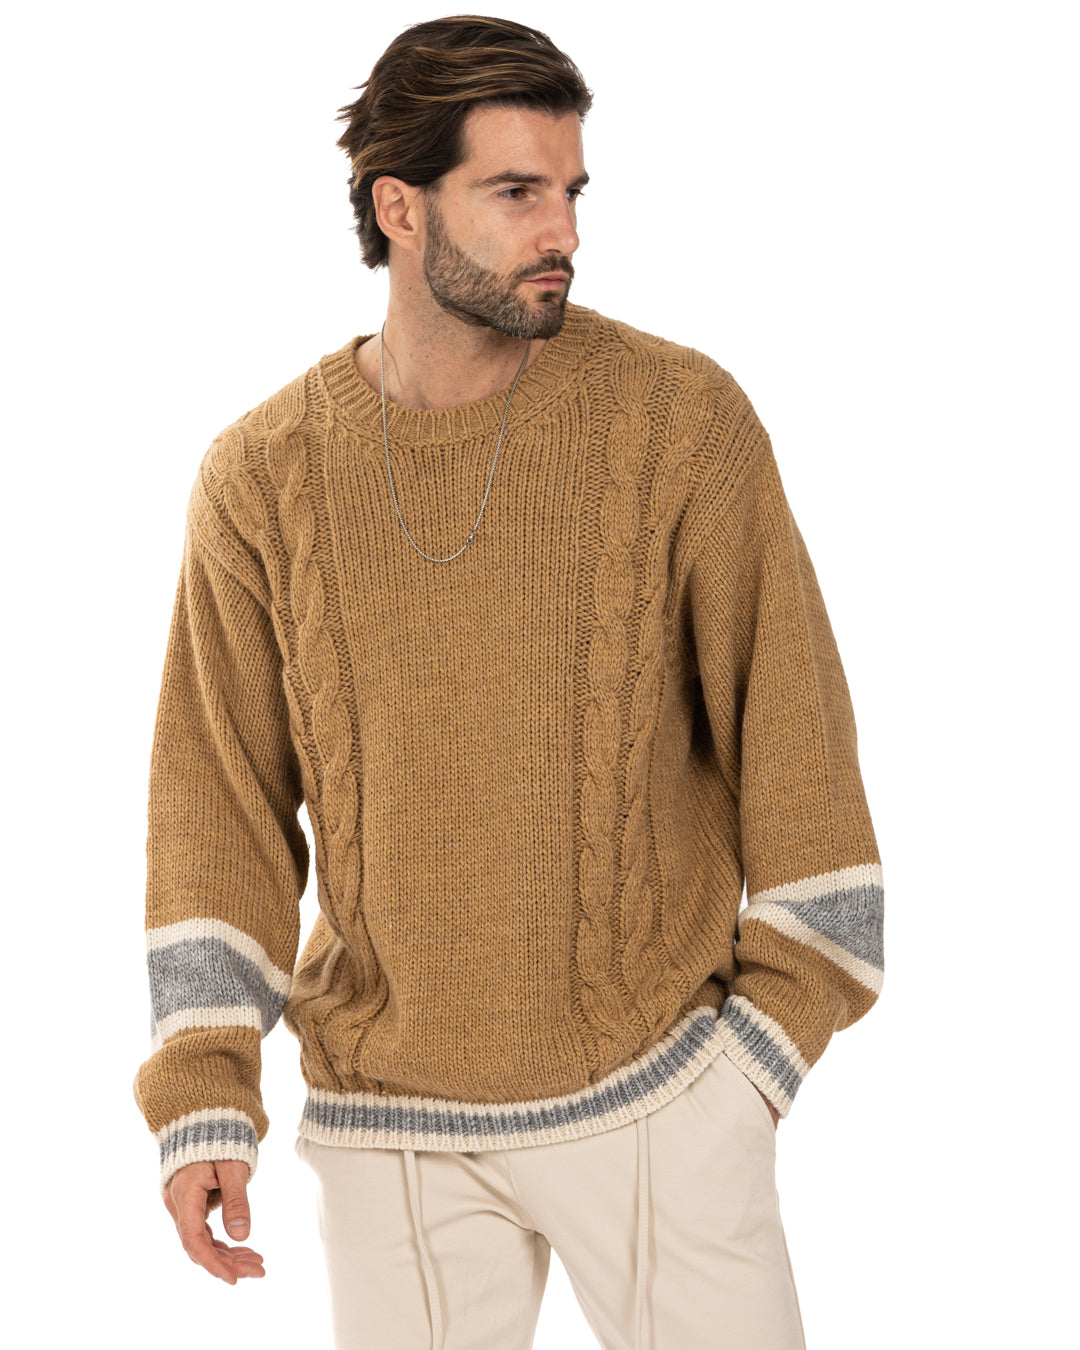 Edam - camel sweater with side braids